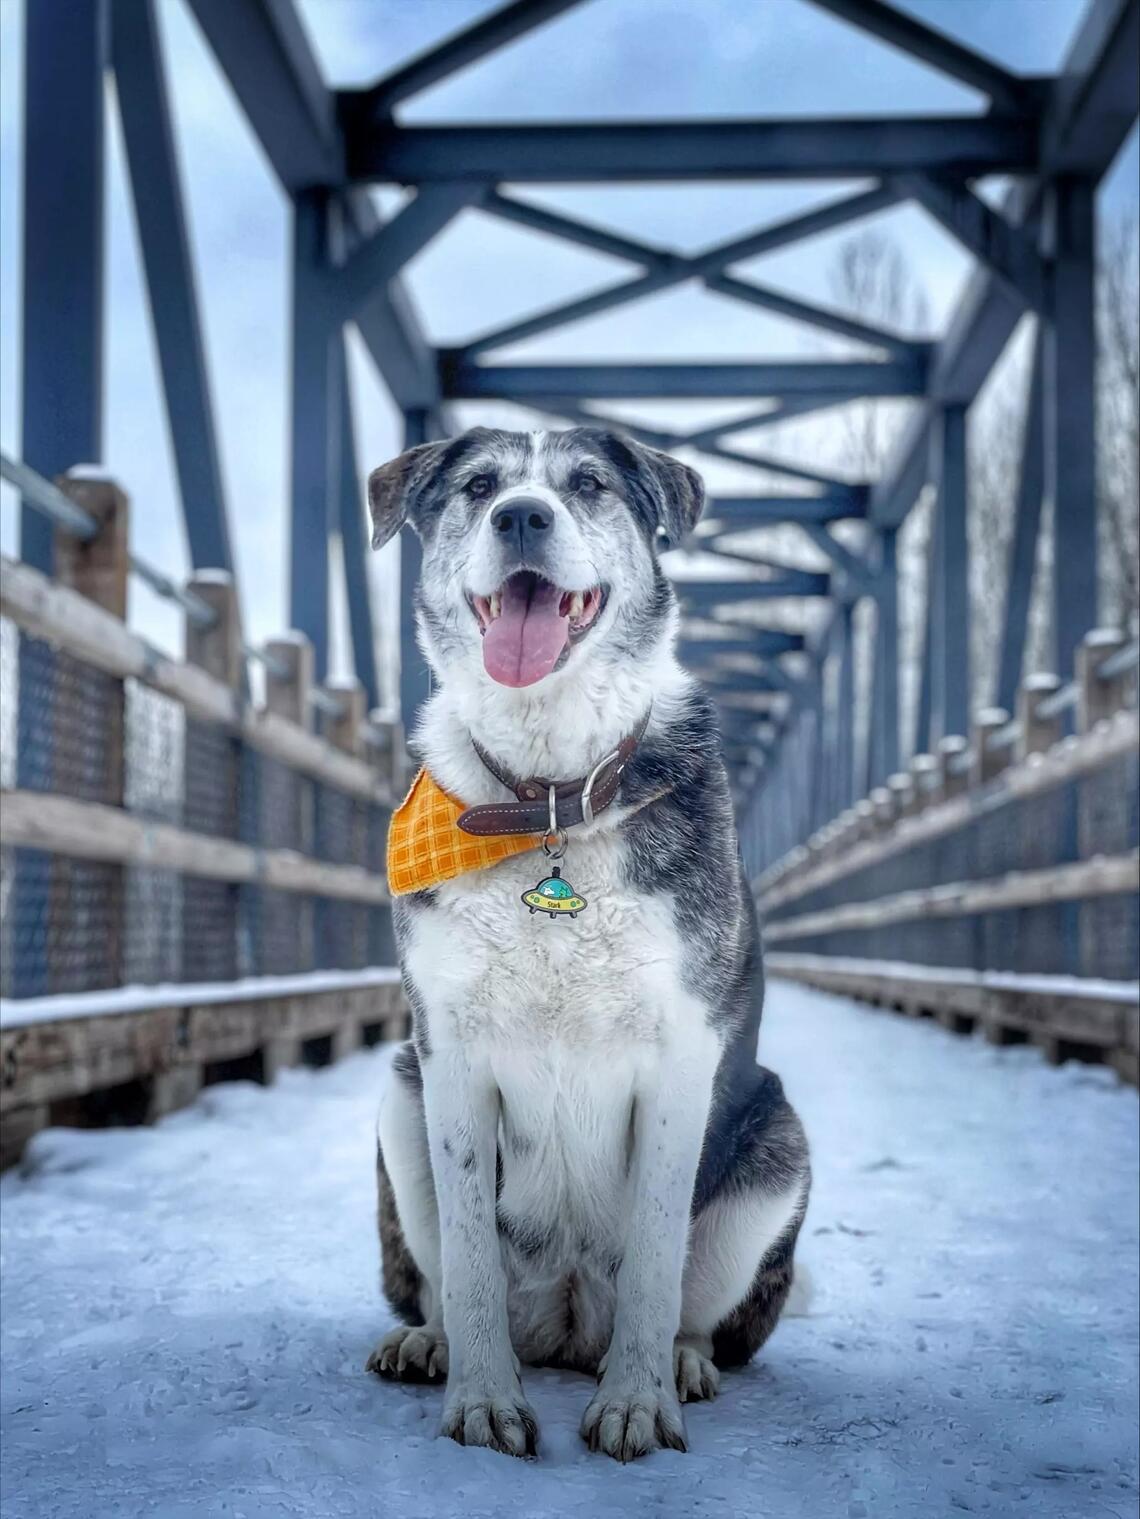 A black and white dog wearing a yellow bandana sits on a snowy bridge